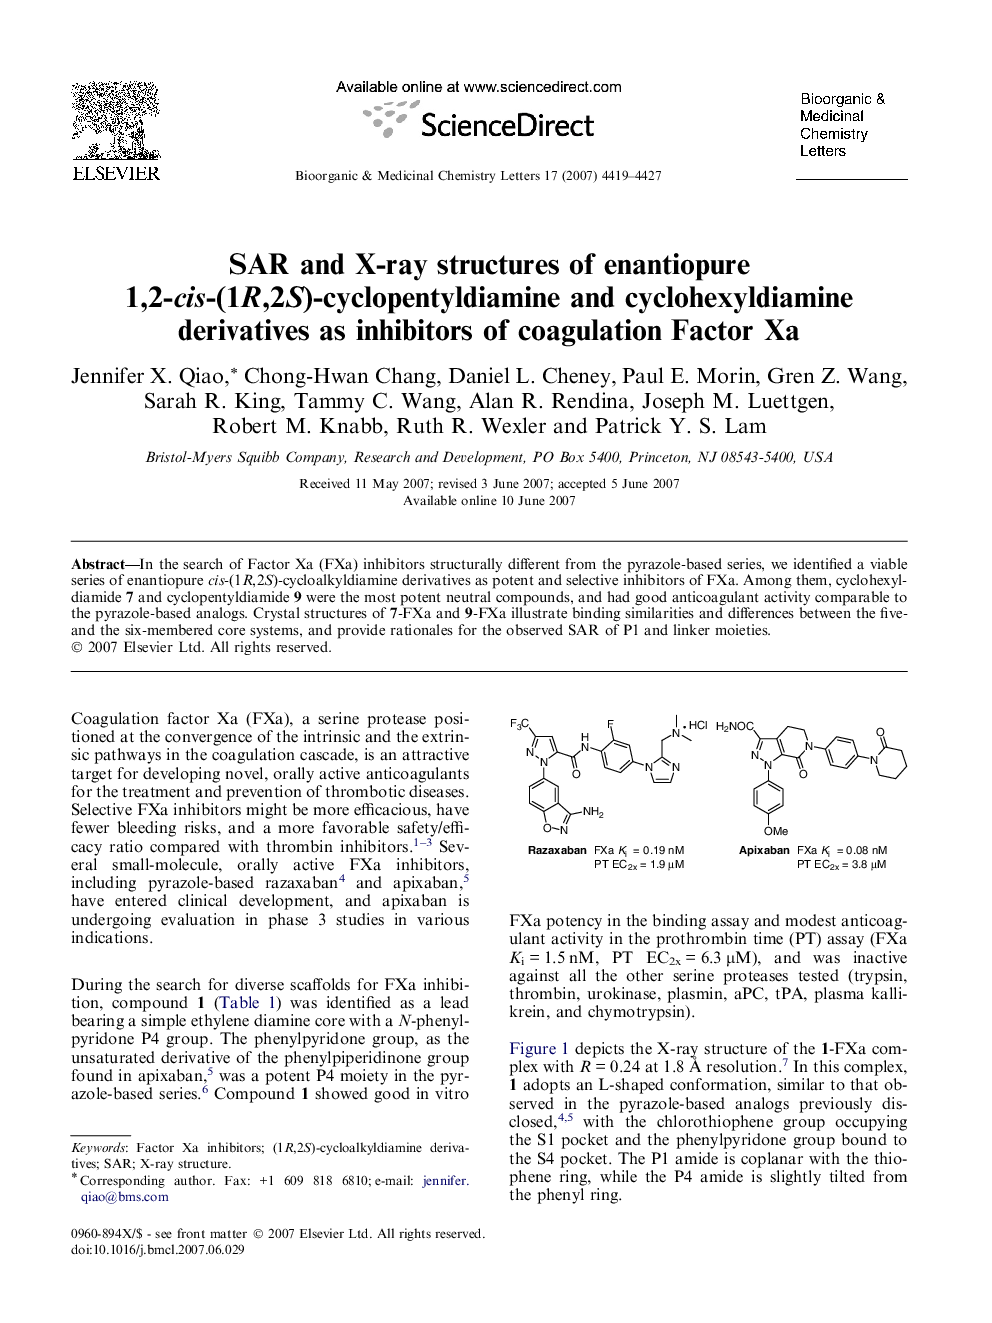 SAR and X-ray structures of enantiopure 1,2-cis-(1R,2S)-cyclopentyldiamine and cyclohexyldiamine derivatives as inhibitors of coagulation Factor Xa